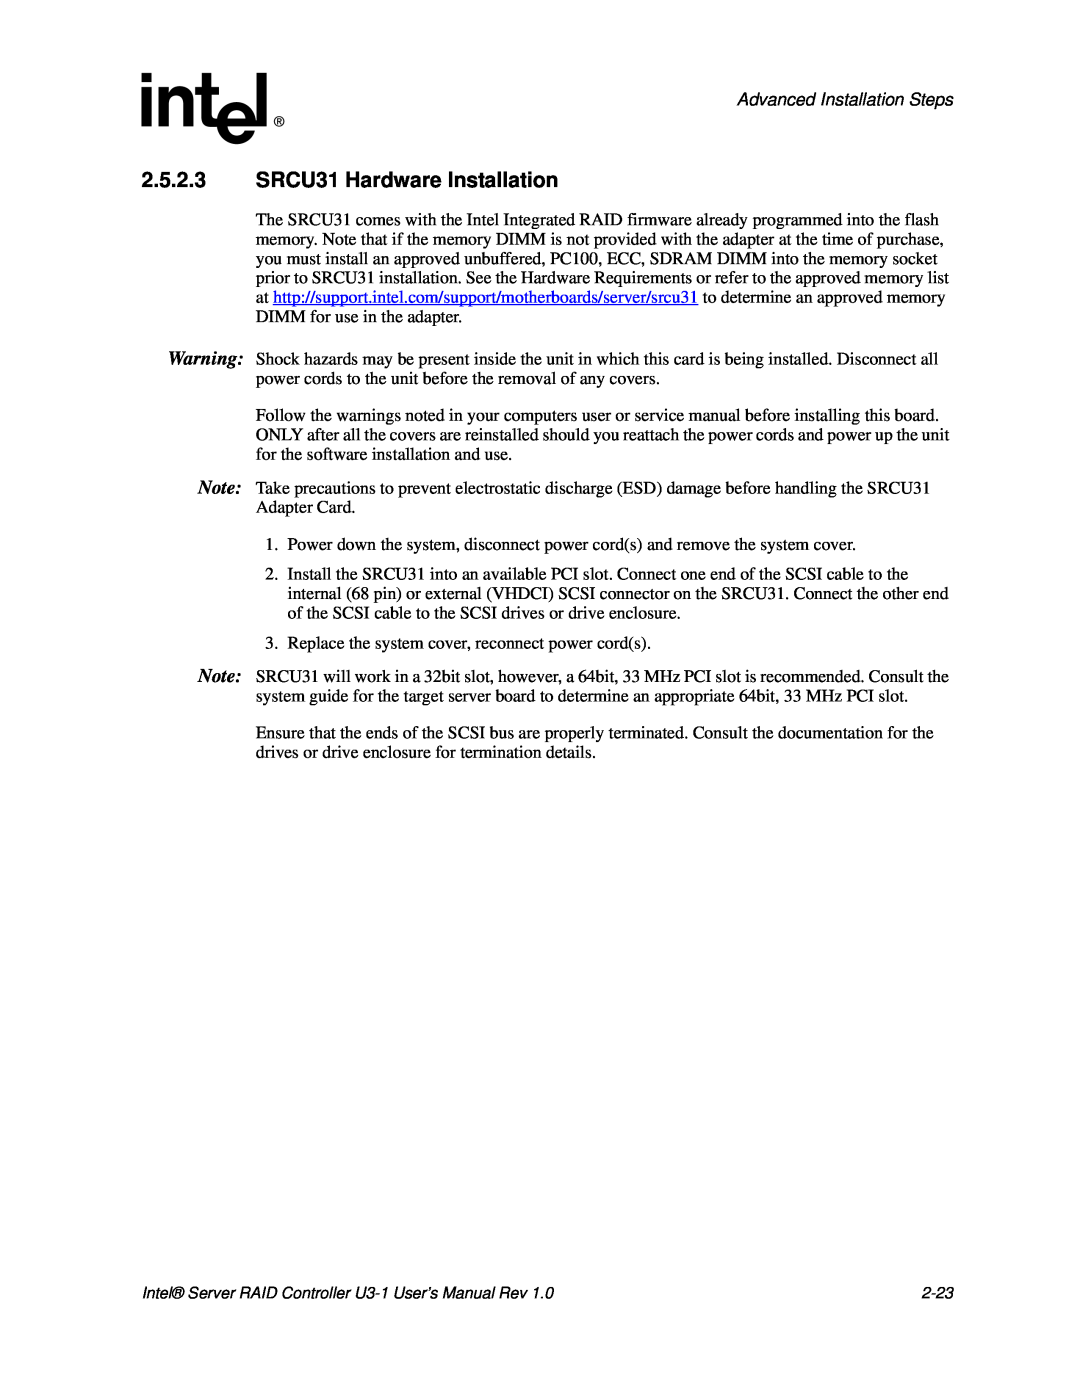 Intel user manual 2.5.2.3SRCU31 Hardware Installation, Advanced Installation Steps 